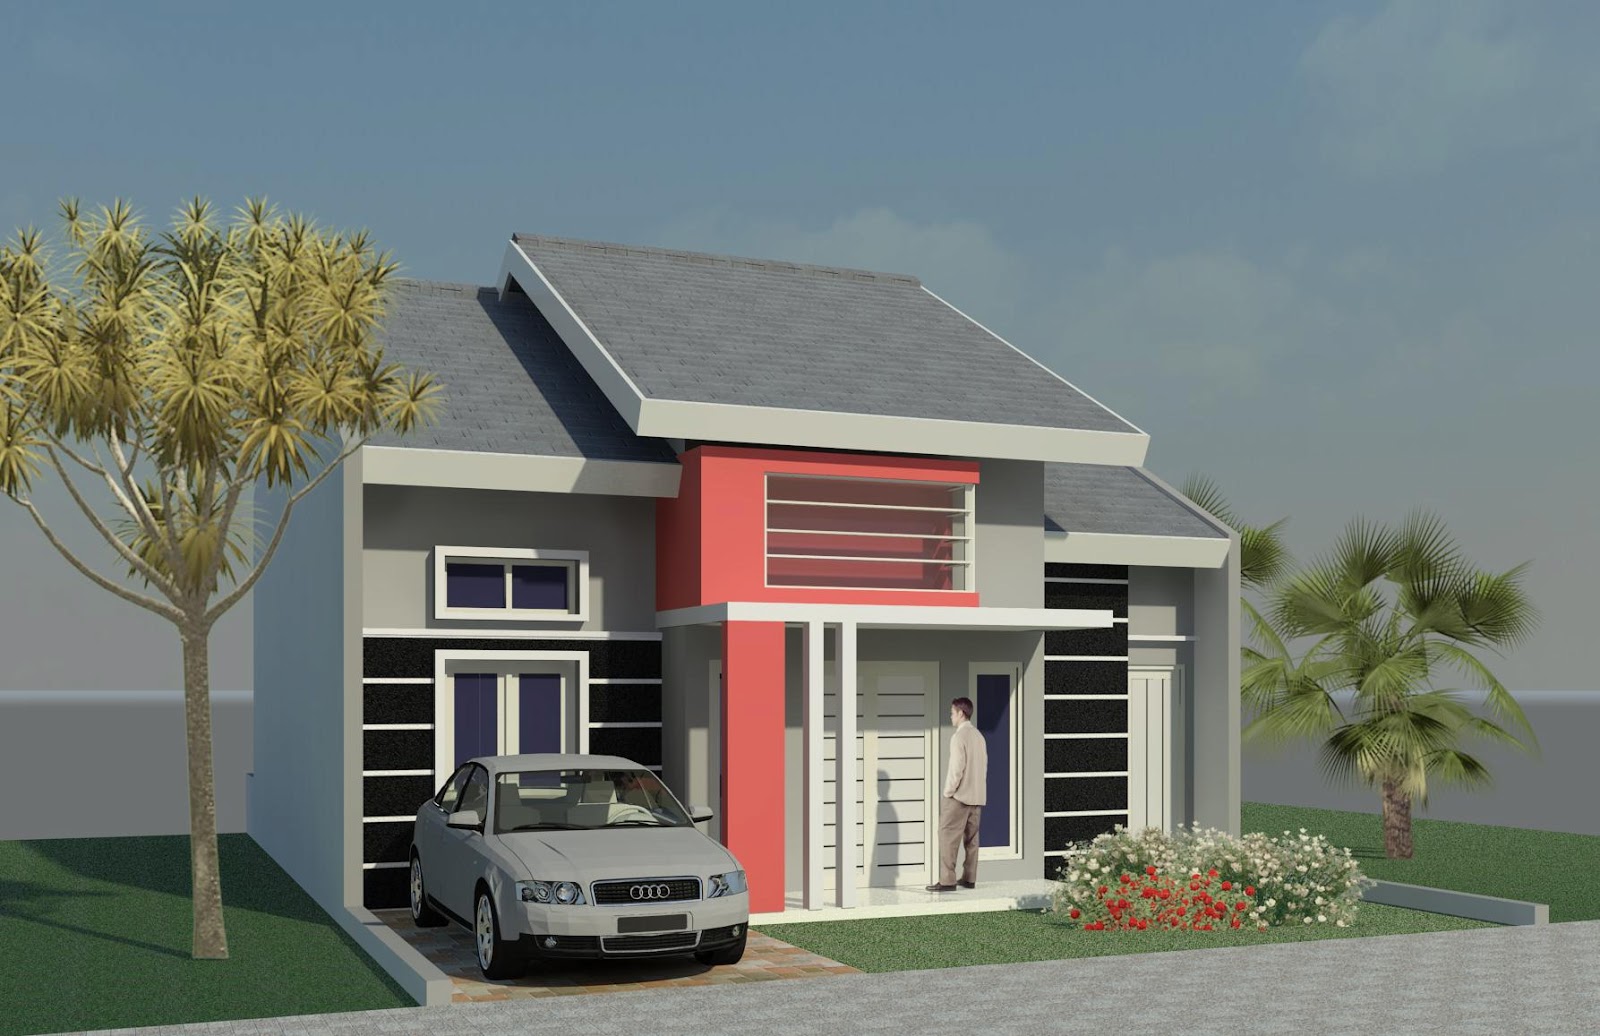  Gambar  Desain Rumah  Minimalis  Modern Type 36 1  Lantai  Terbaru  Desain Rumah  Minimalis  Terbaru  